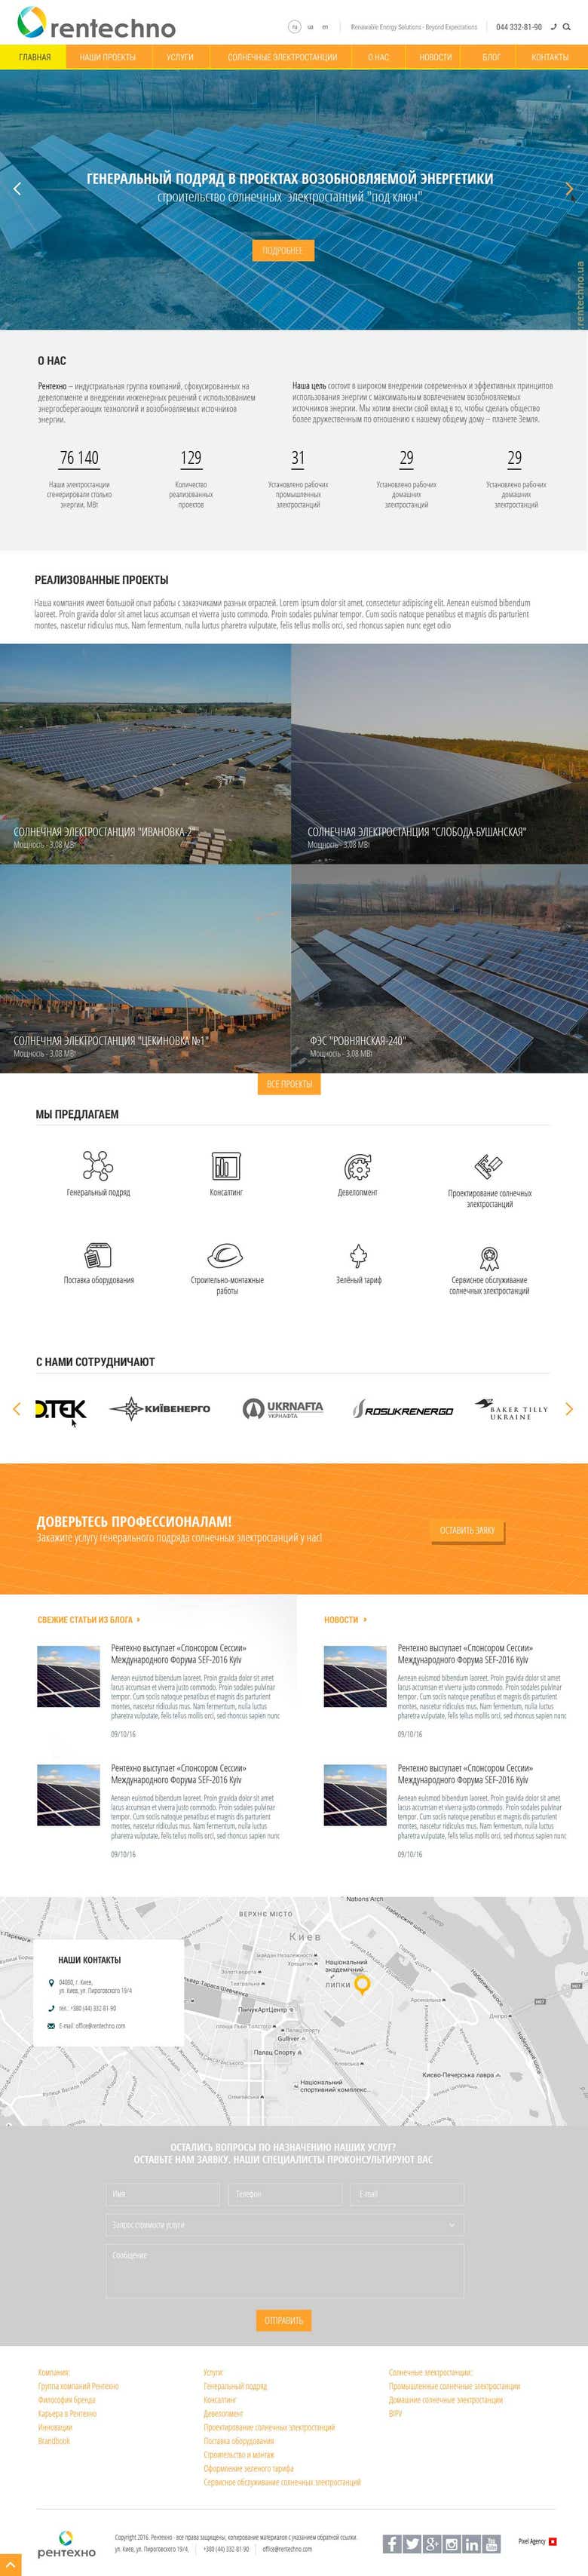 Redesign of corporate website